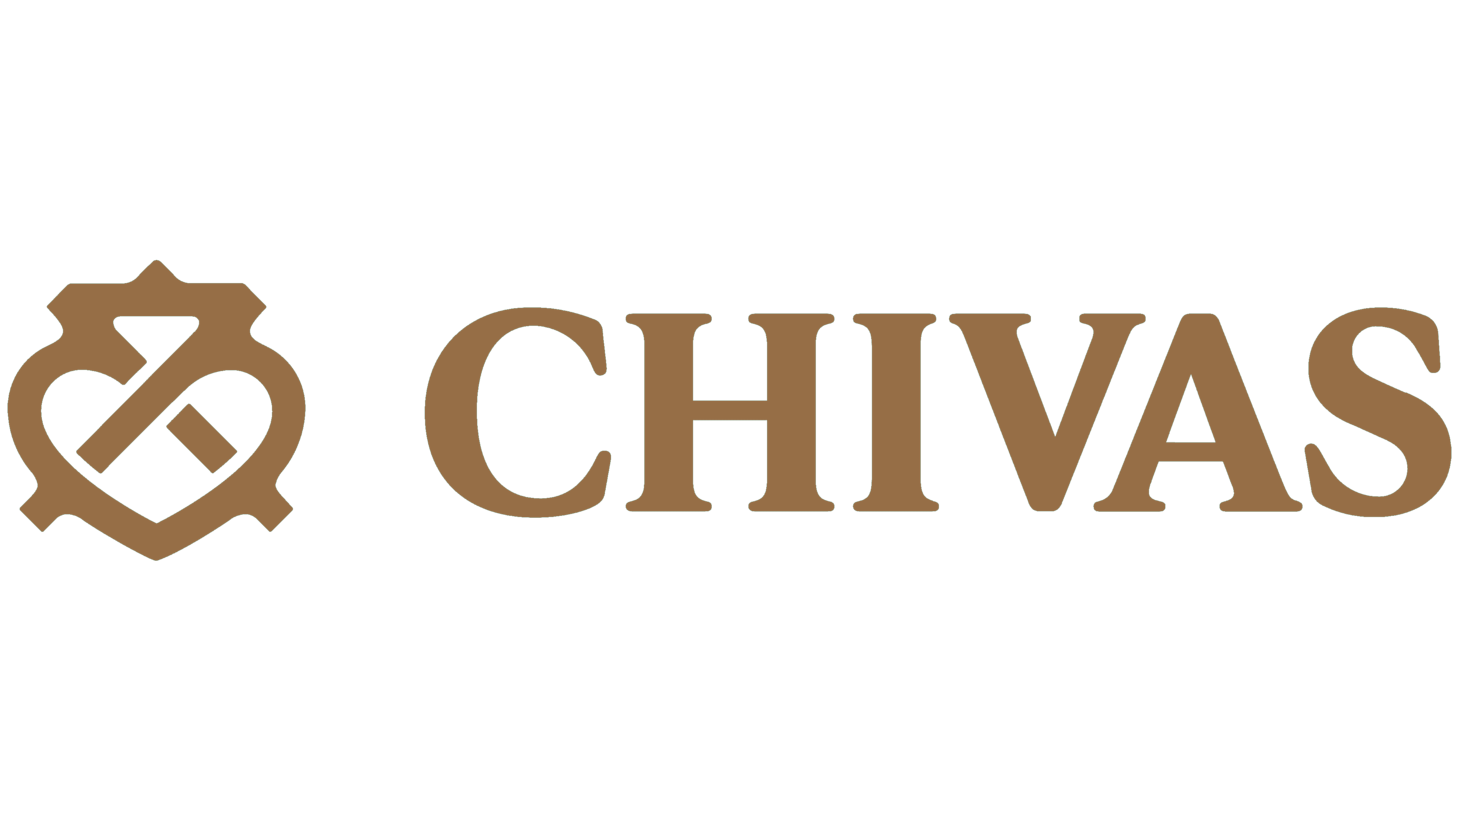 Chivas sign